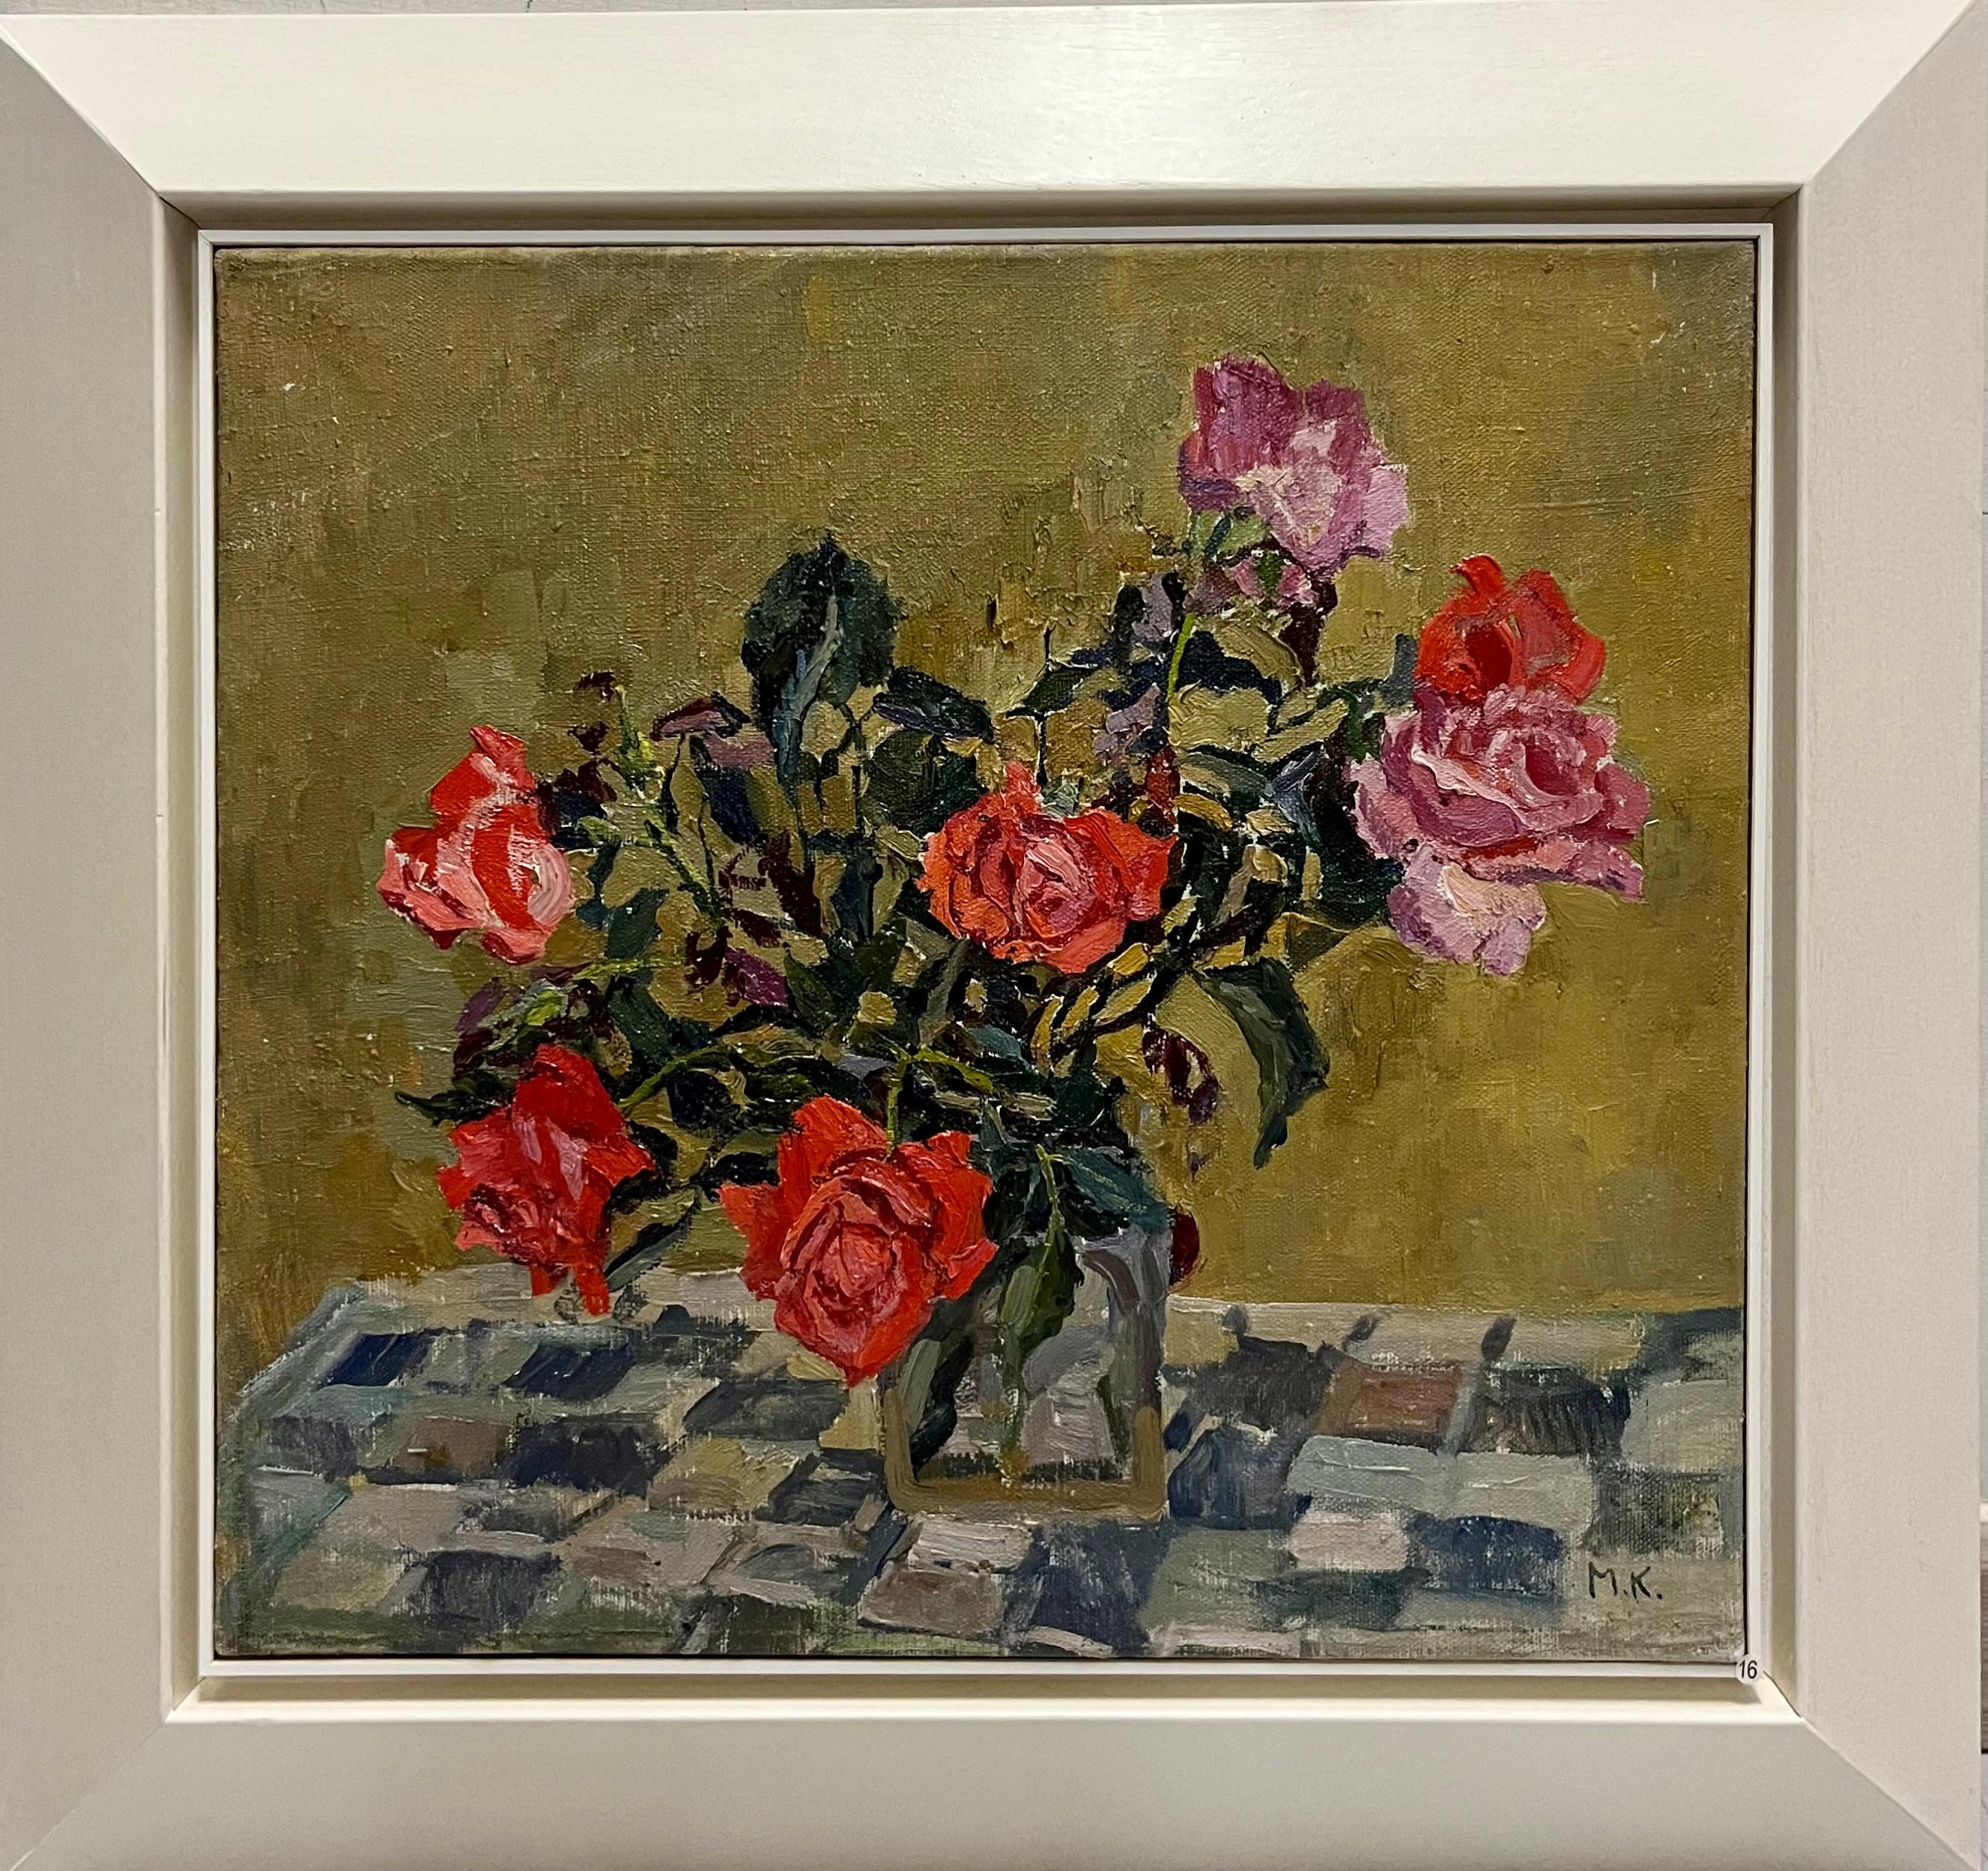 Maya KOPITZEVA Figurative Painting - "Red Roses” Oil cm 52 x 48 1968